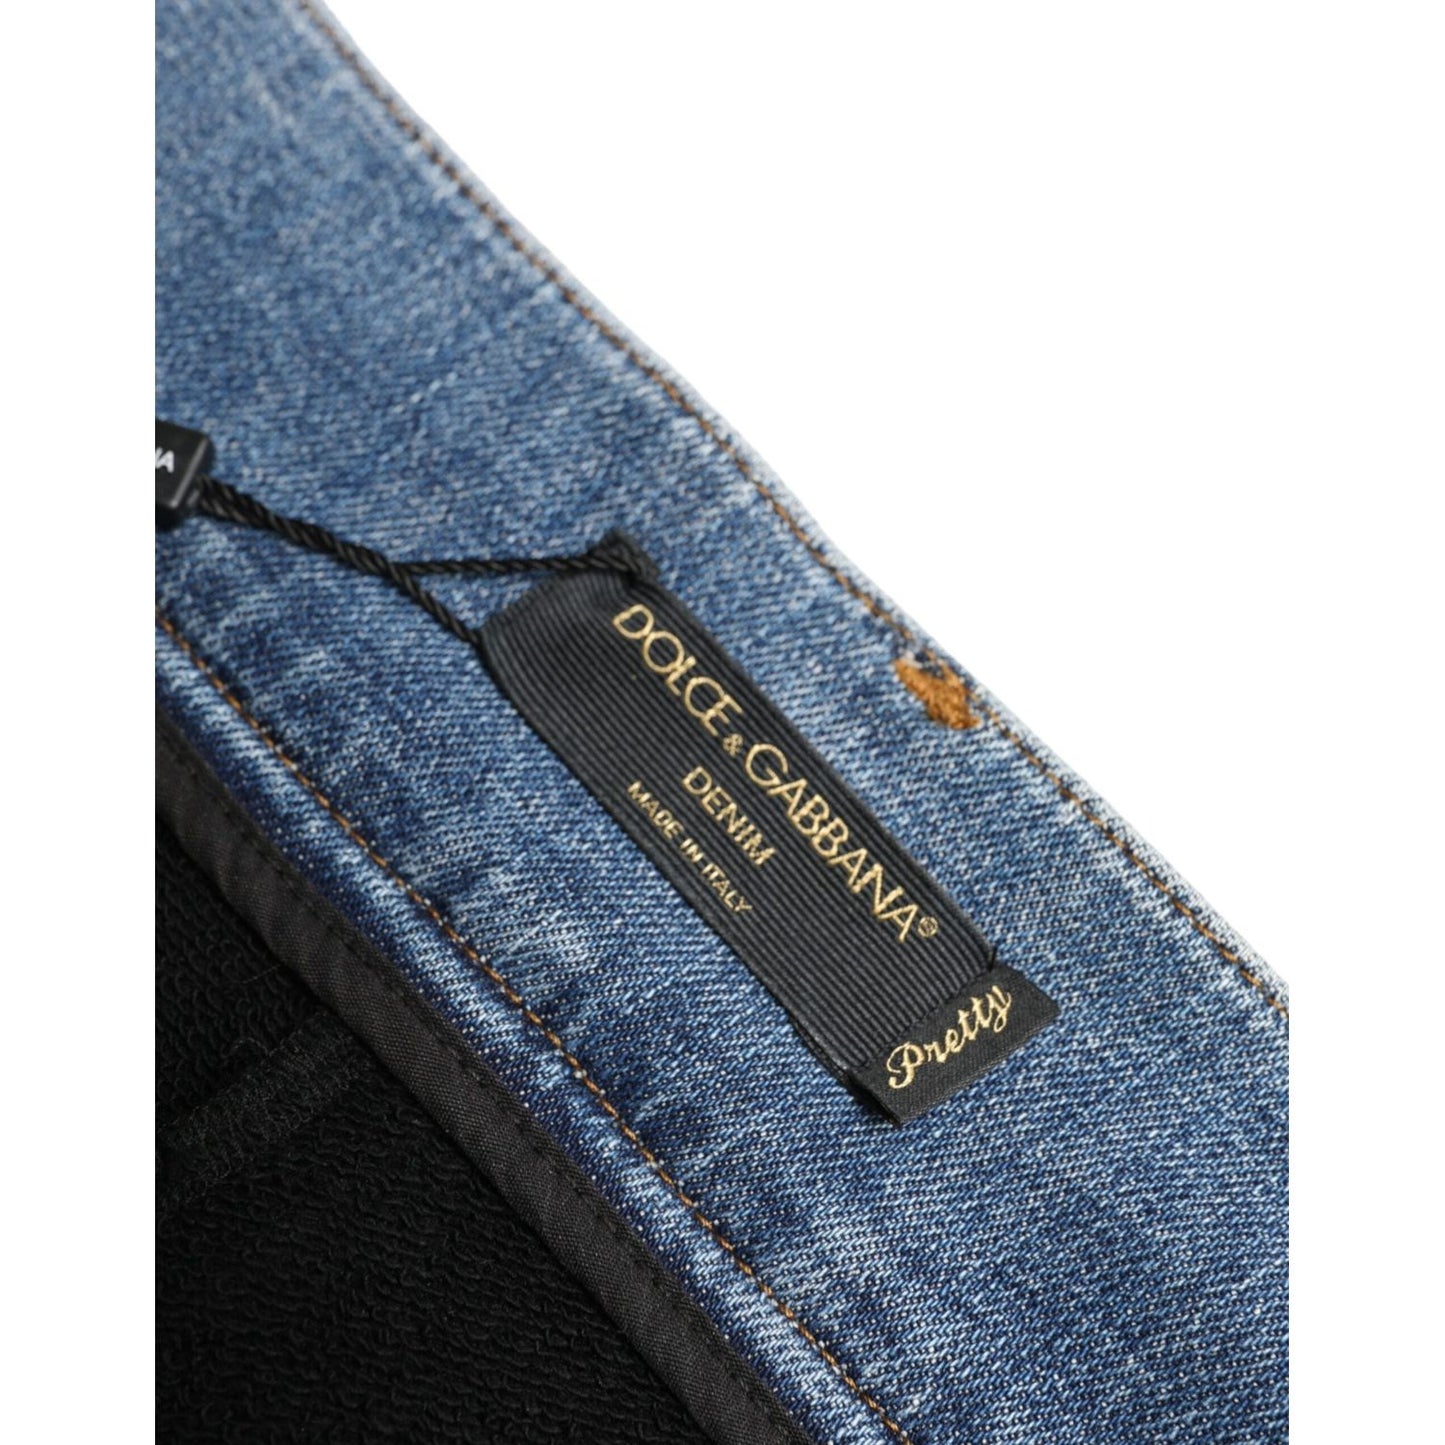 Dolce & Gabbana Chic High Waist Skinny Pants with Denim Shorts black-blue-cotton-high-waist-pretty-denim-pants